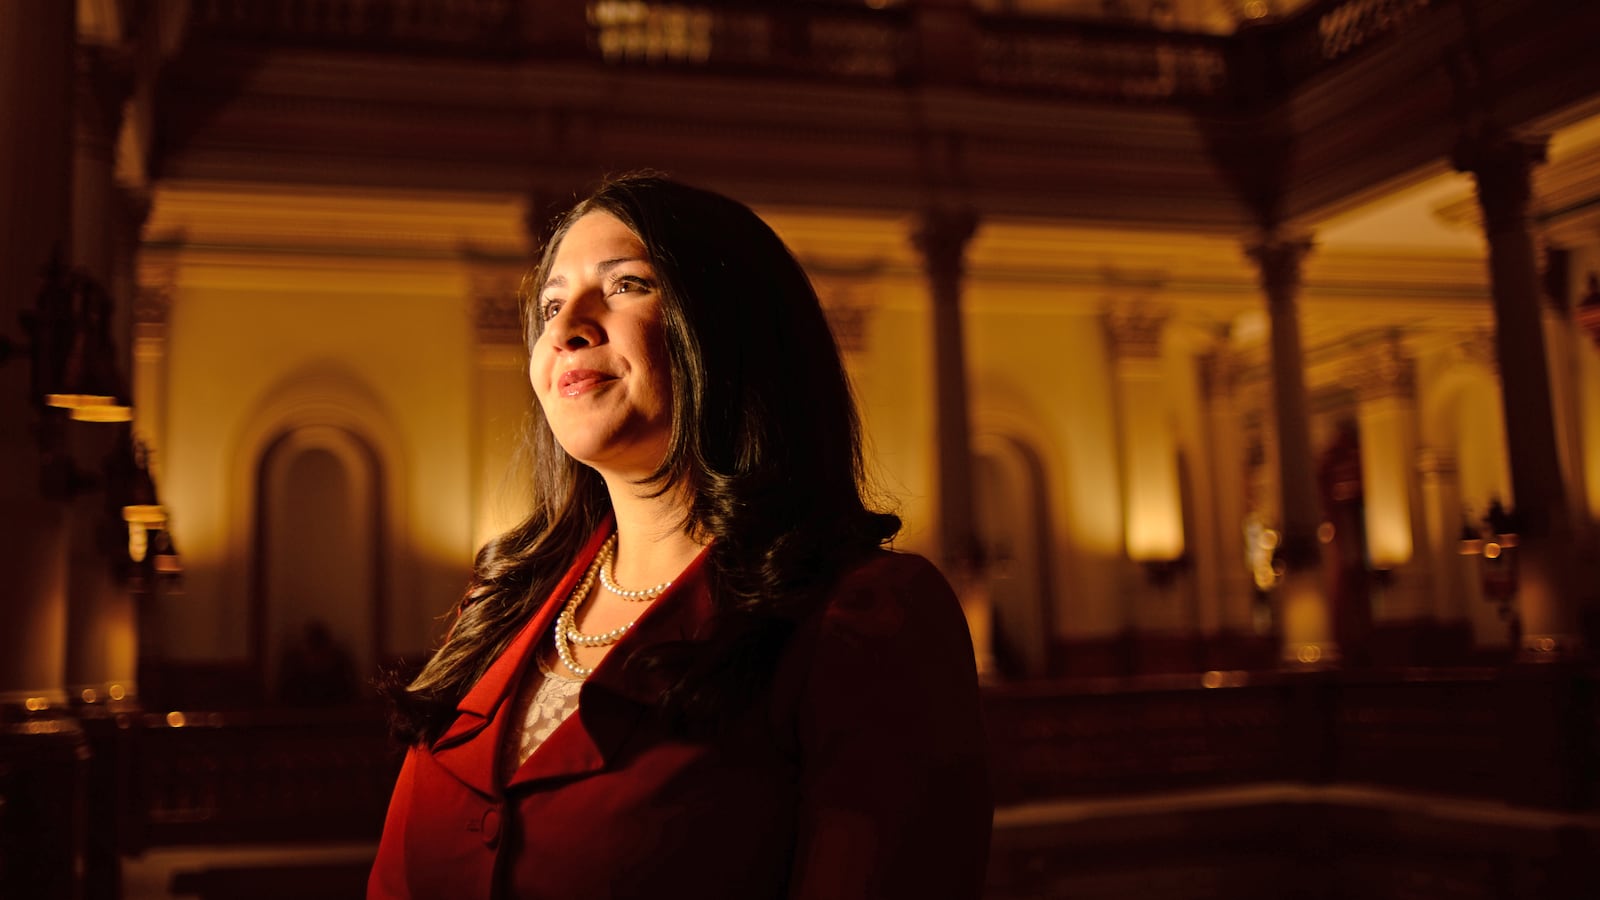 Colorado's Speaker of the House Crisanta Duran